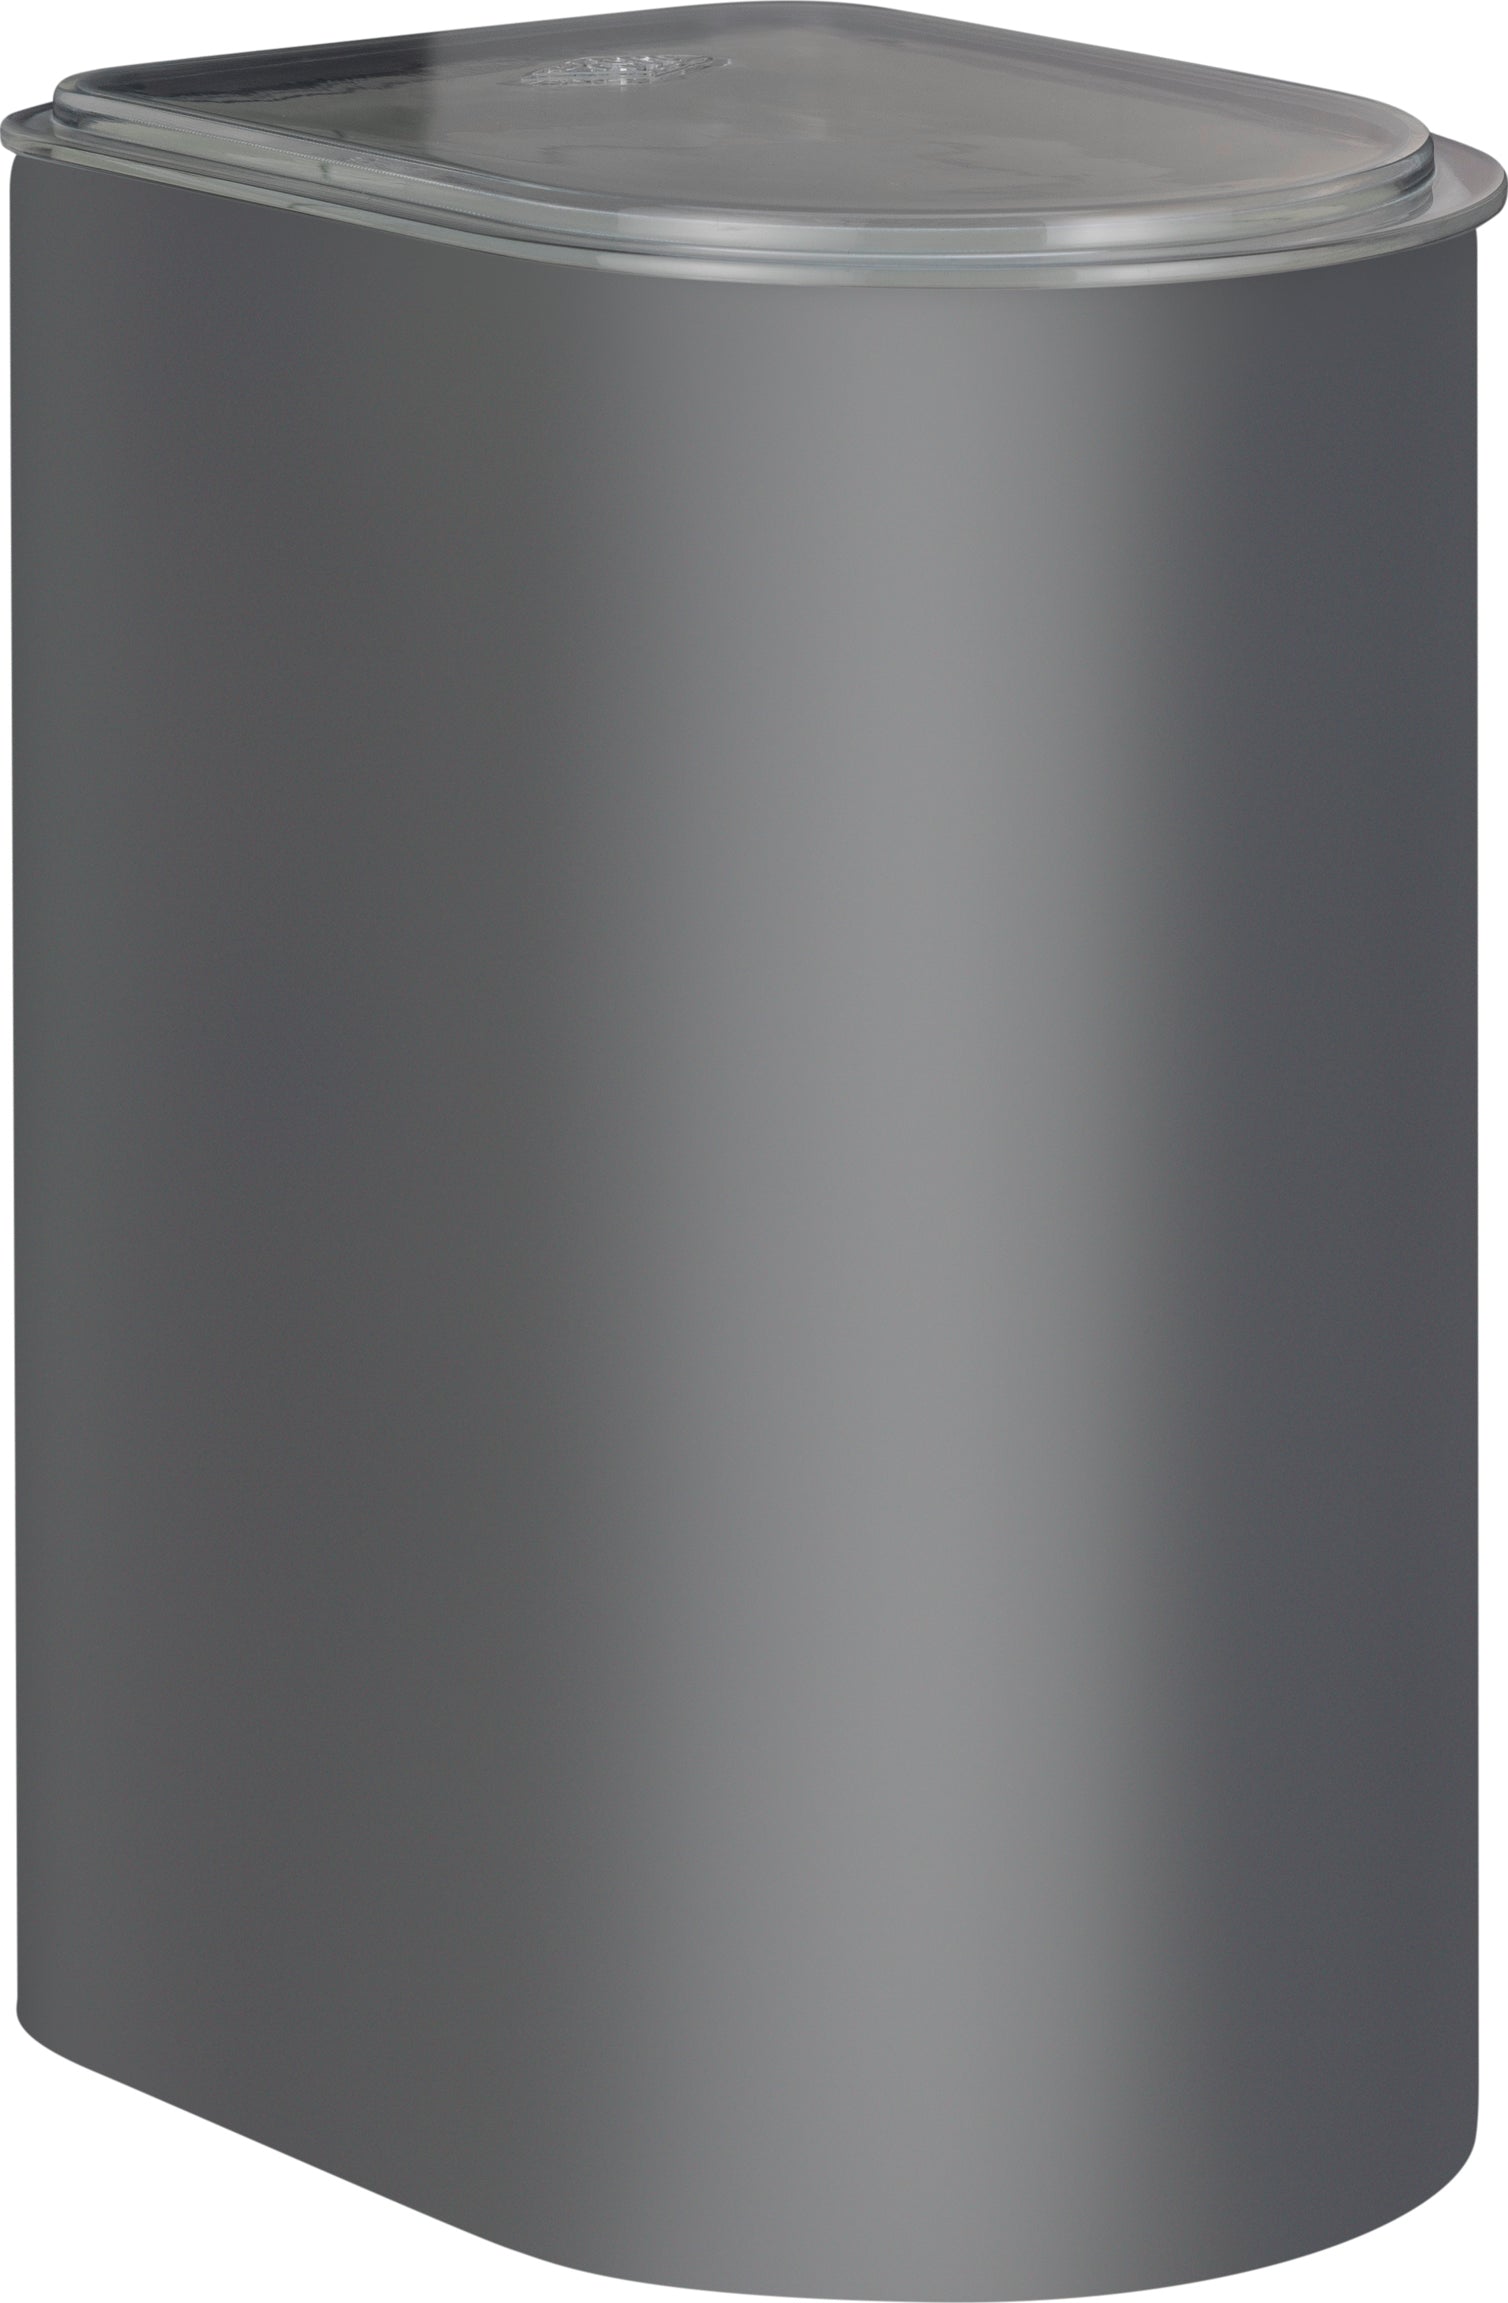 Wesco Bande de cartouche avec couvercle acrylique, graphite Matt